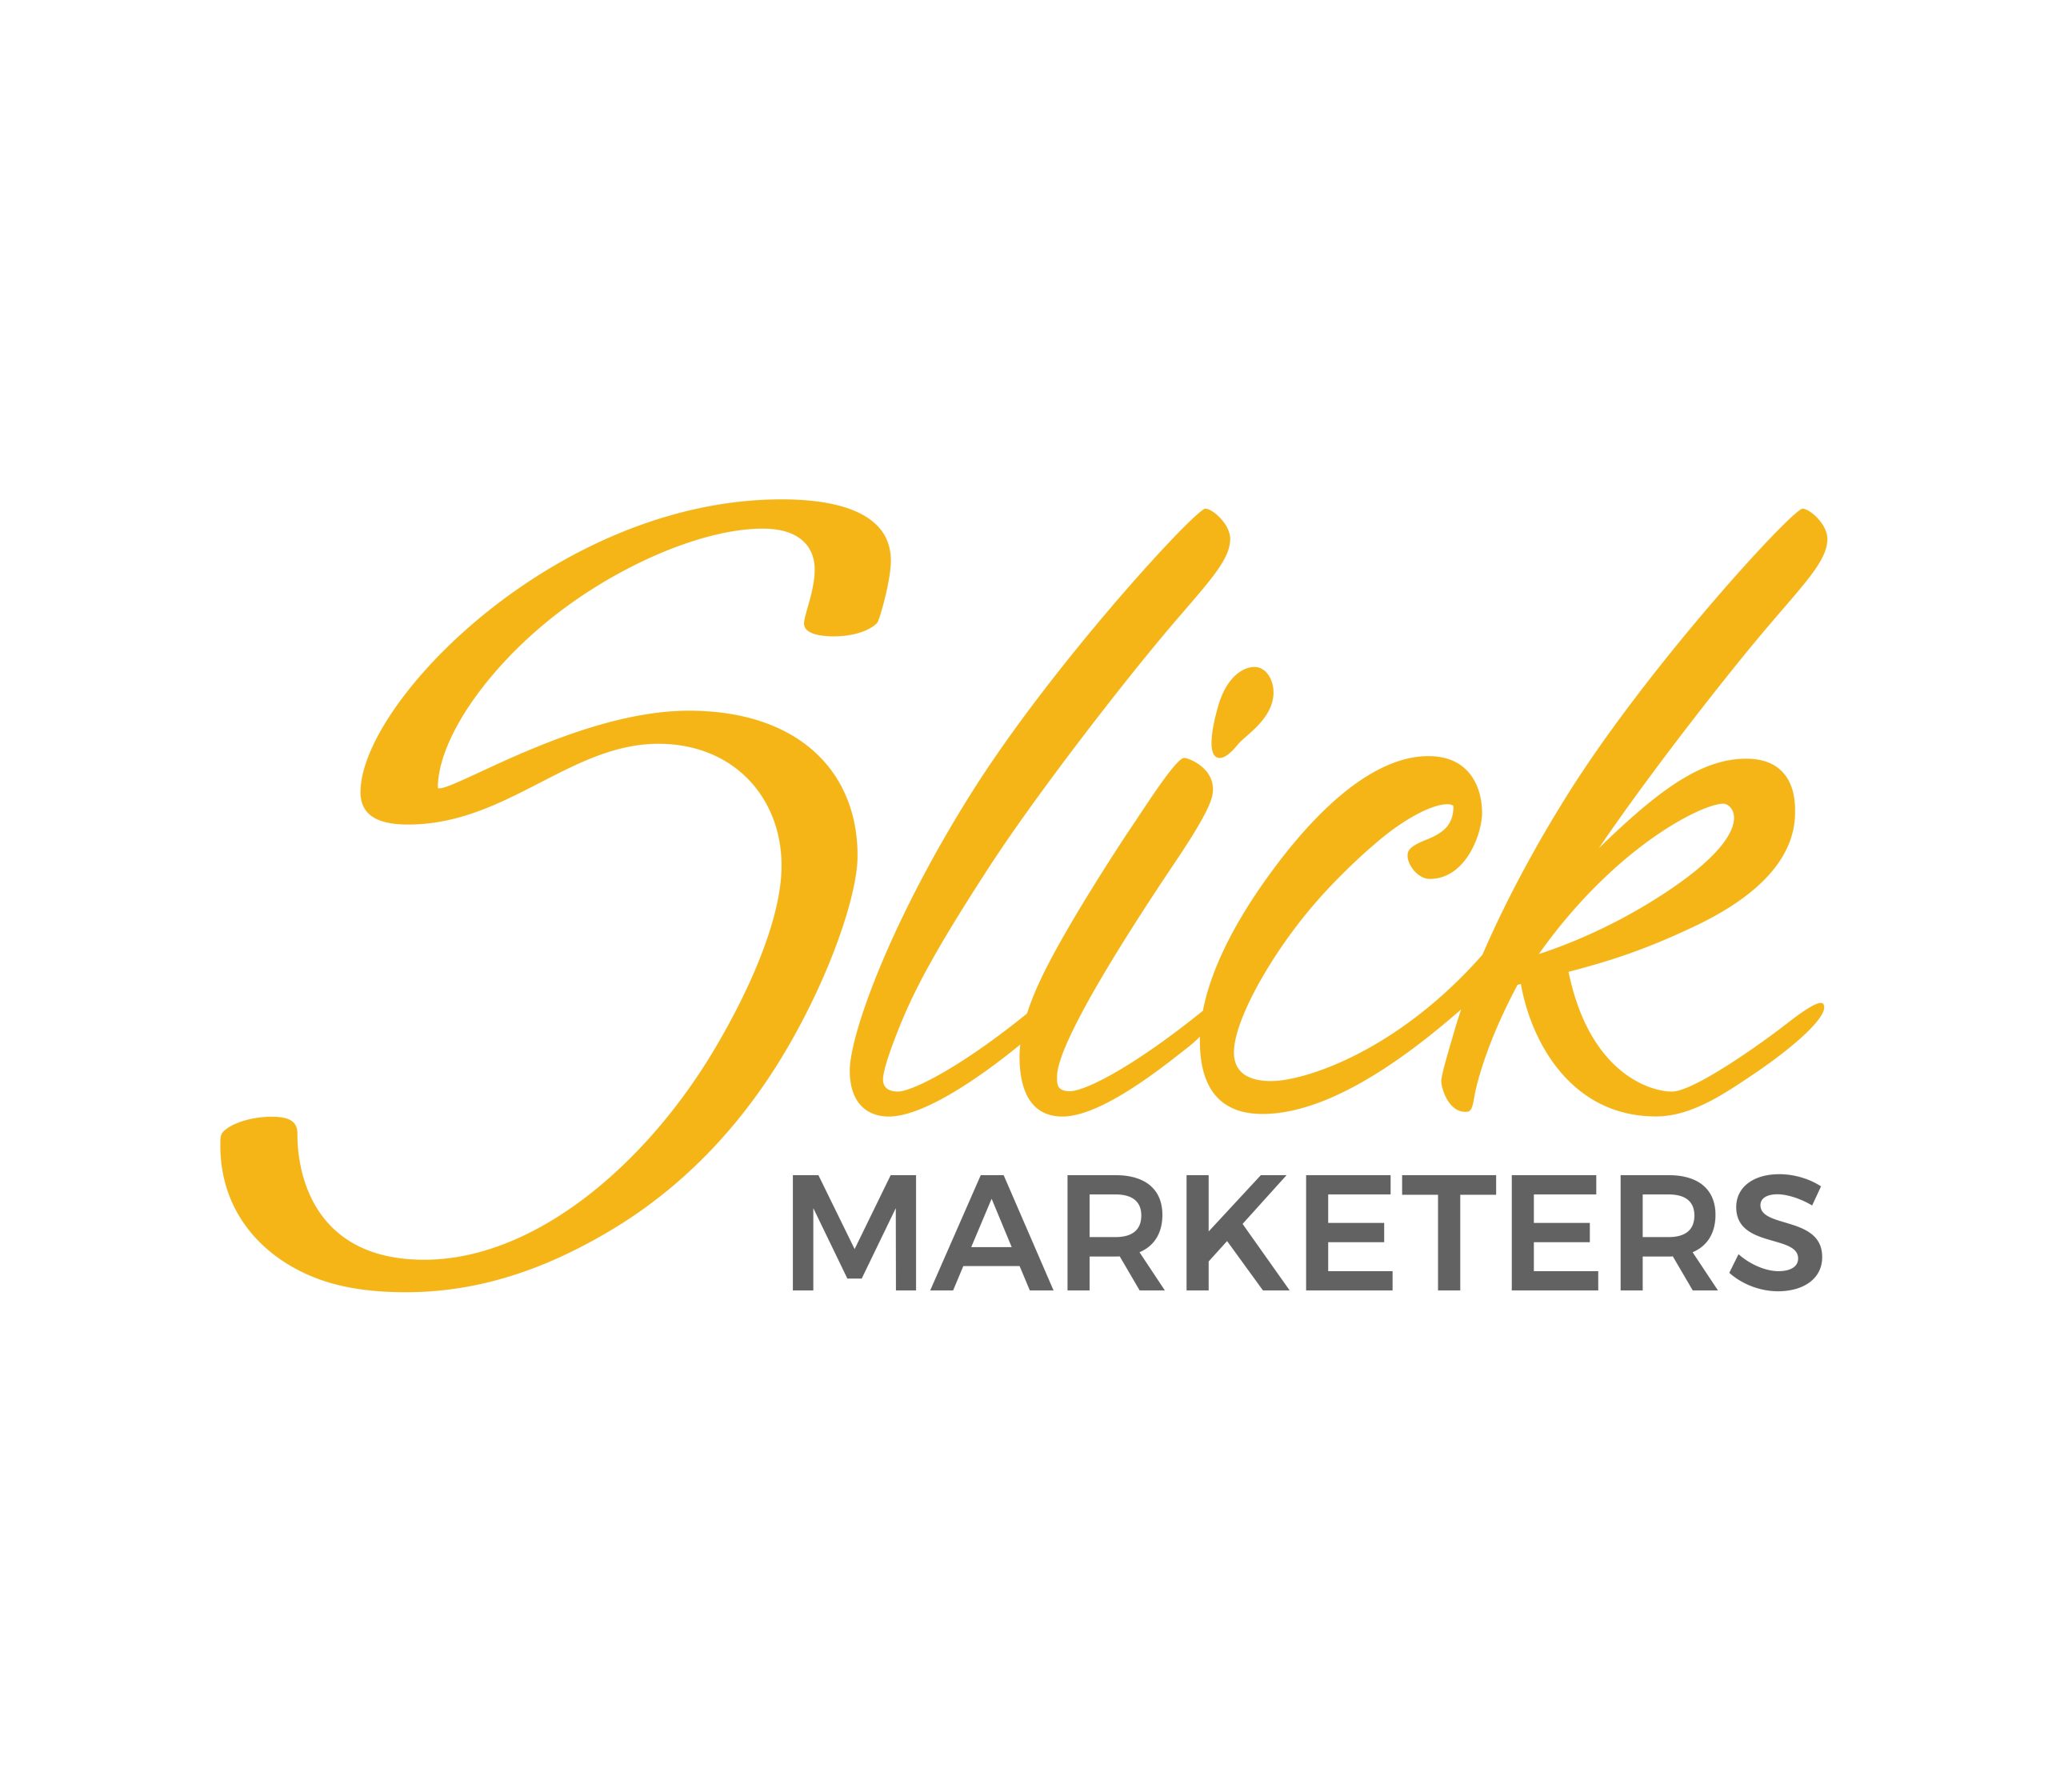 Slick Marketers